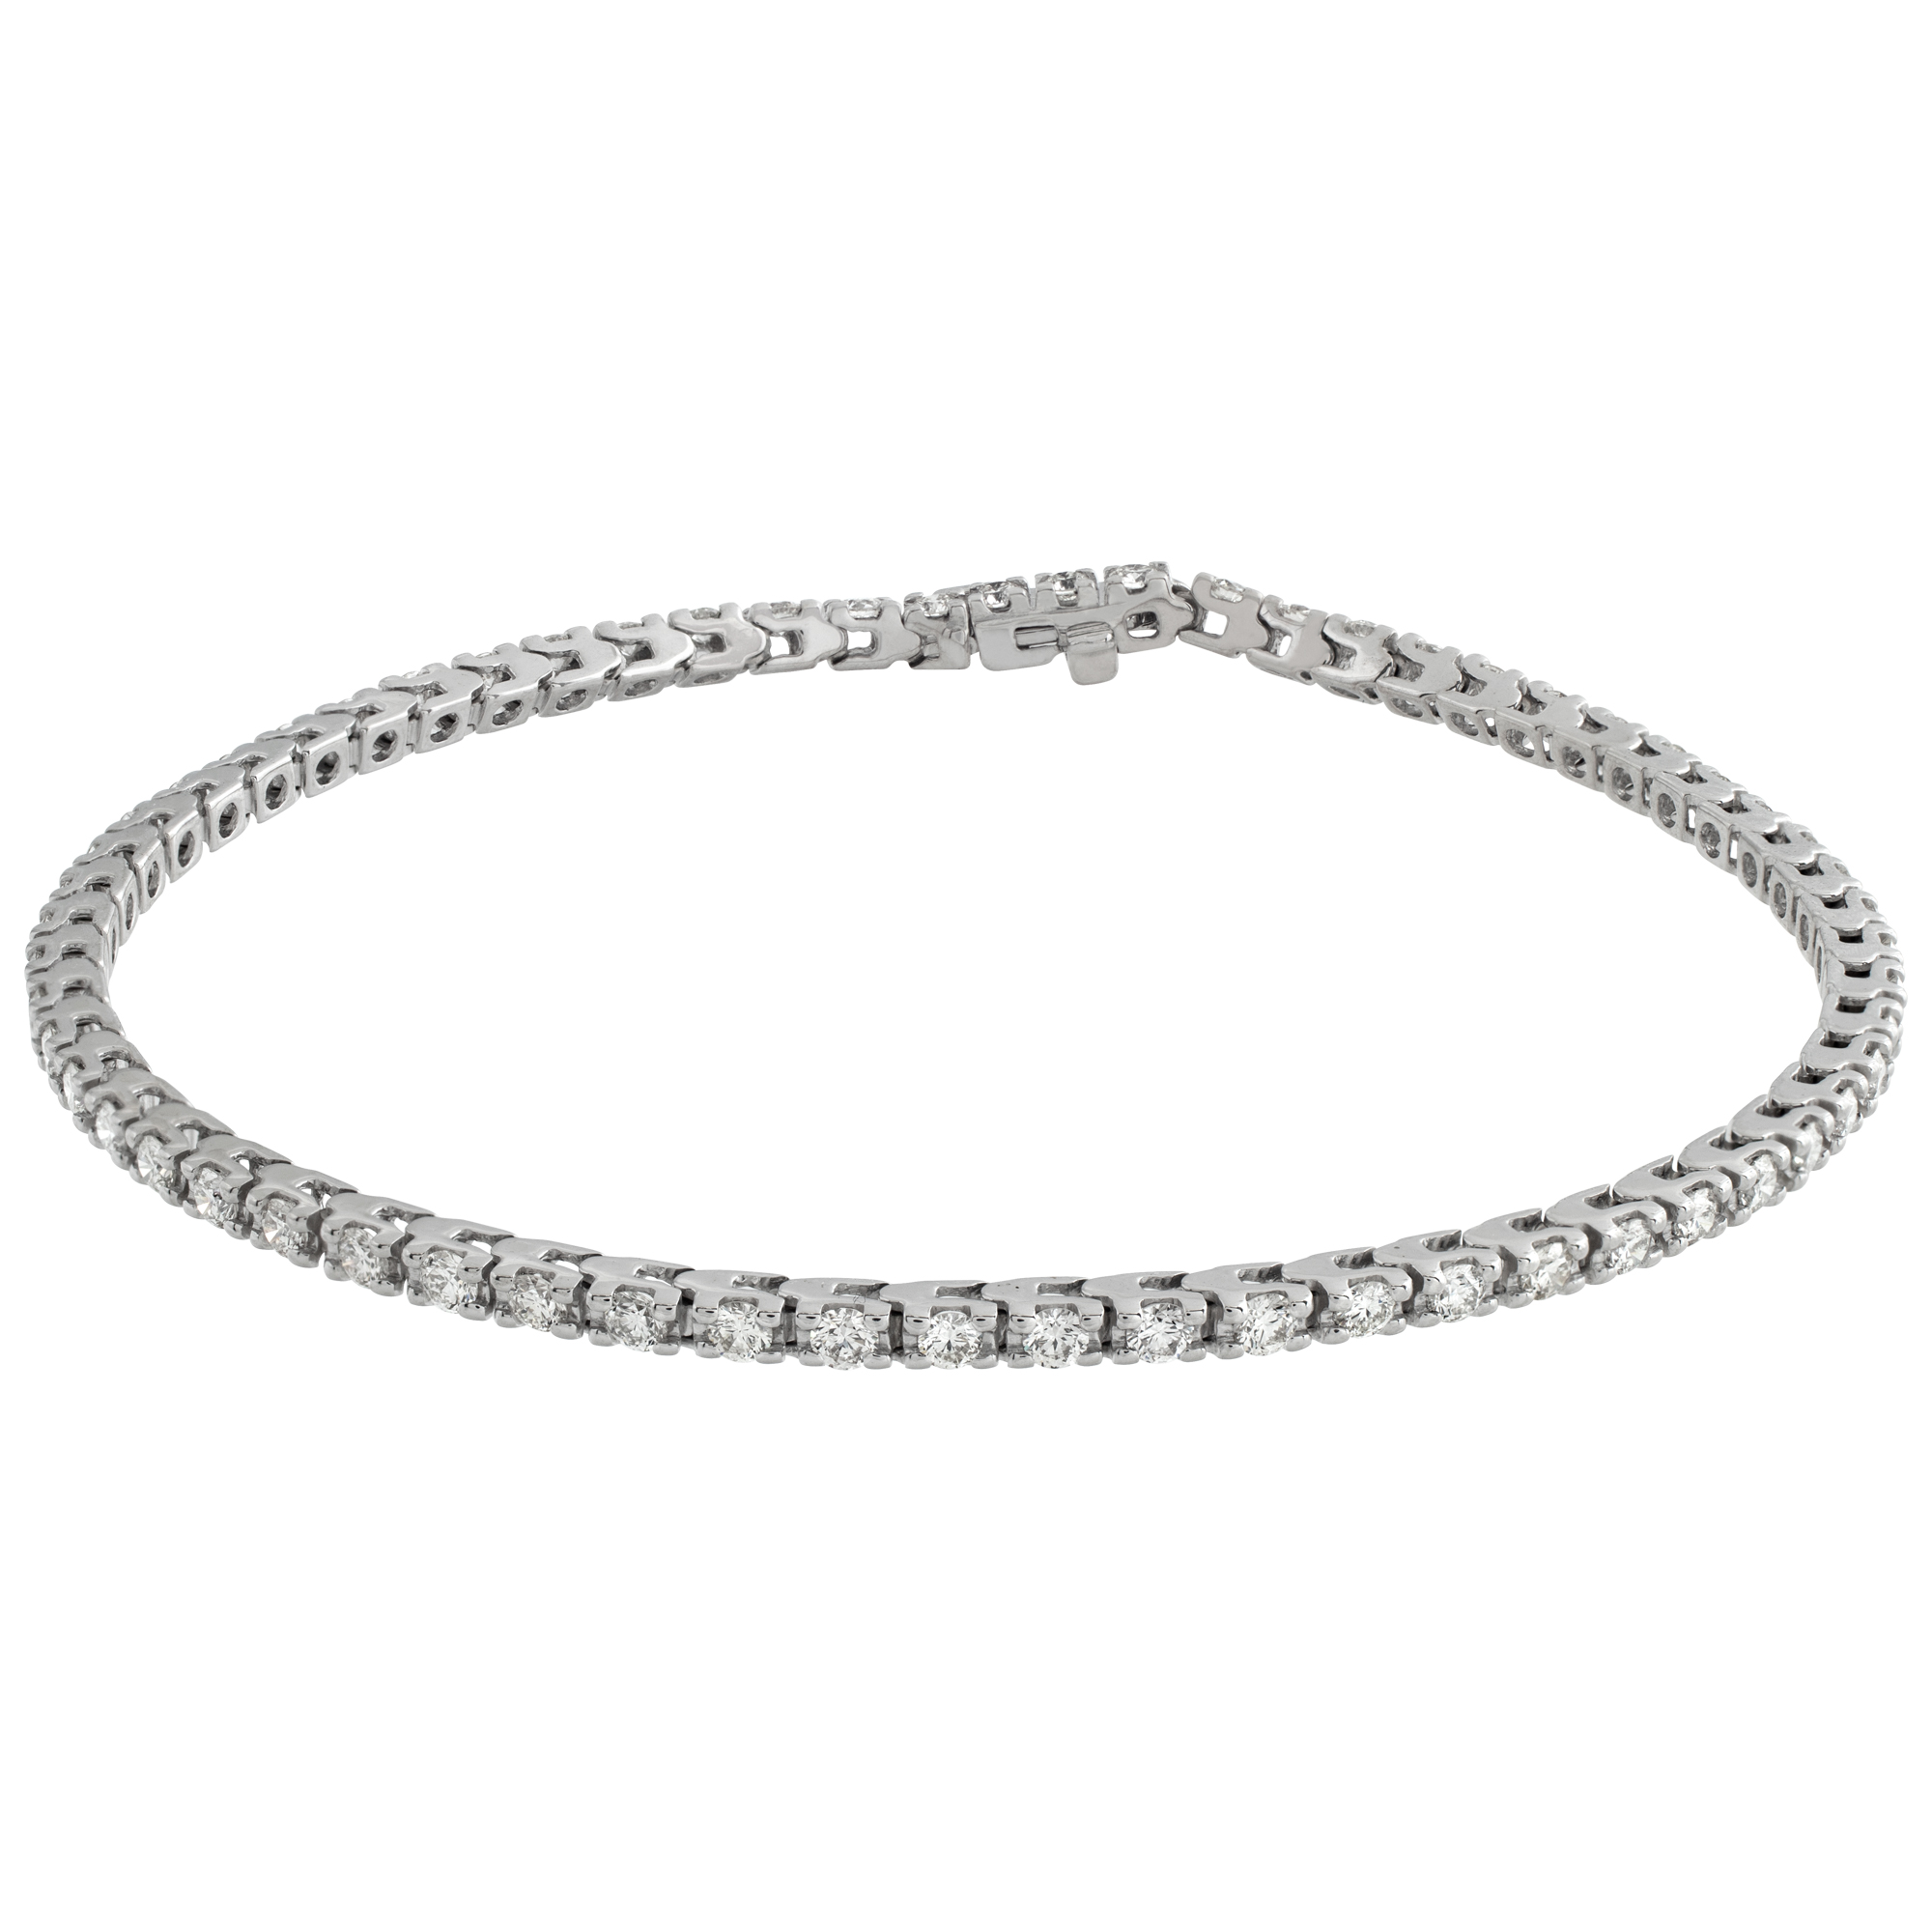 Diamond Line Bracelet In 14k White Gold With Approximately 1.86 Carat Round Brilliant Cut Diamonds,